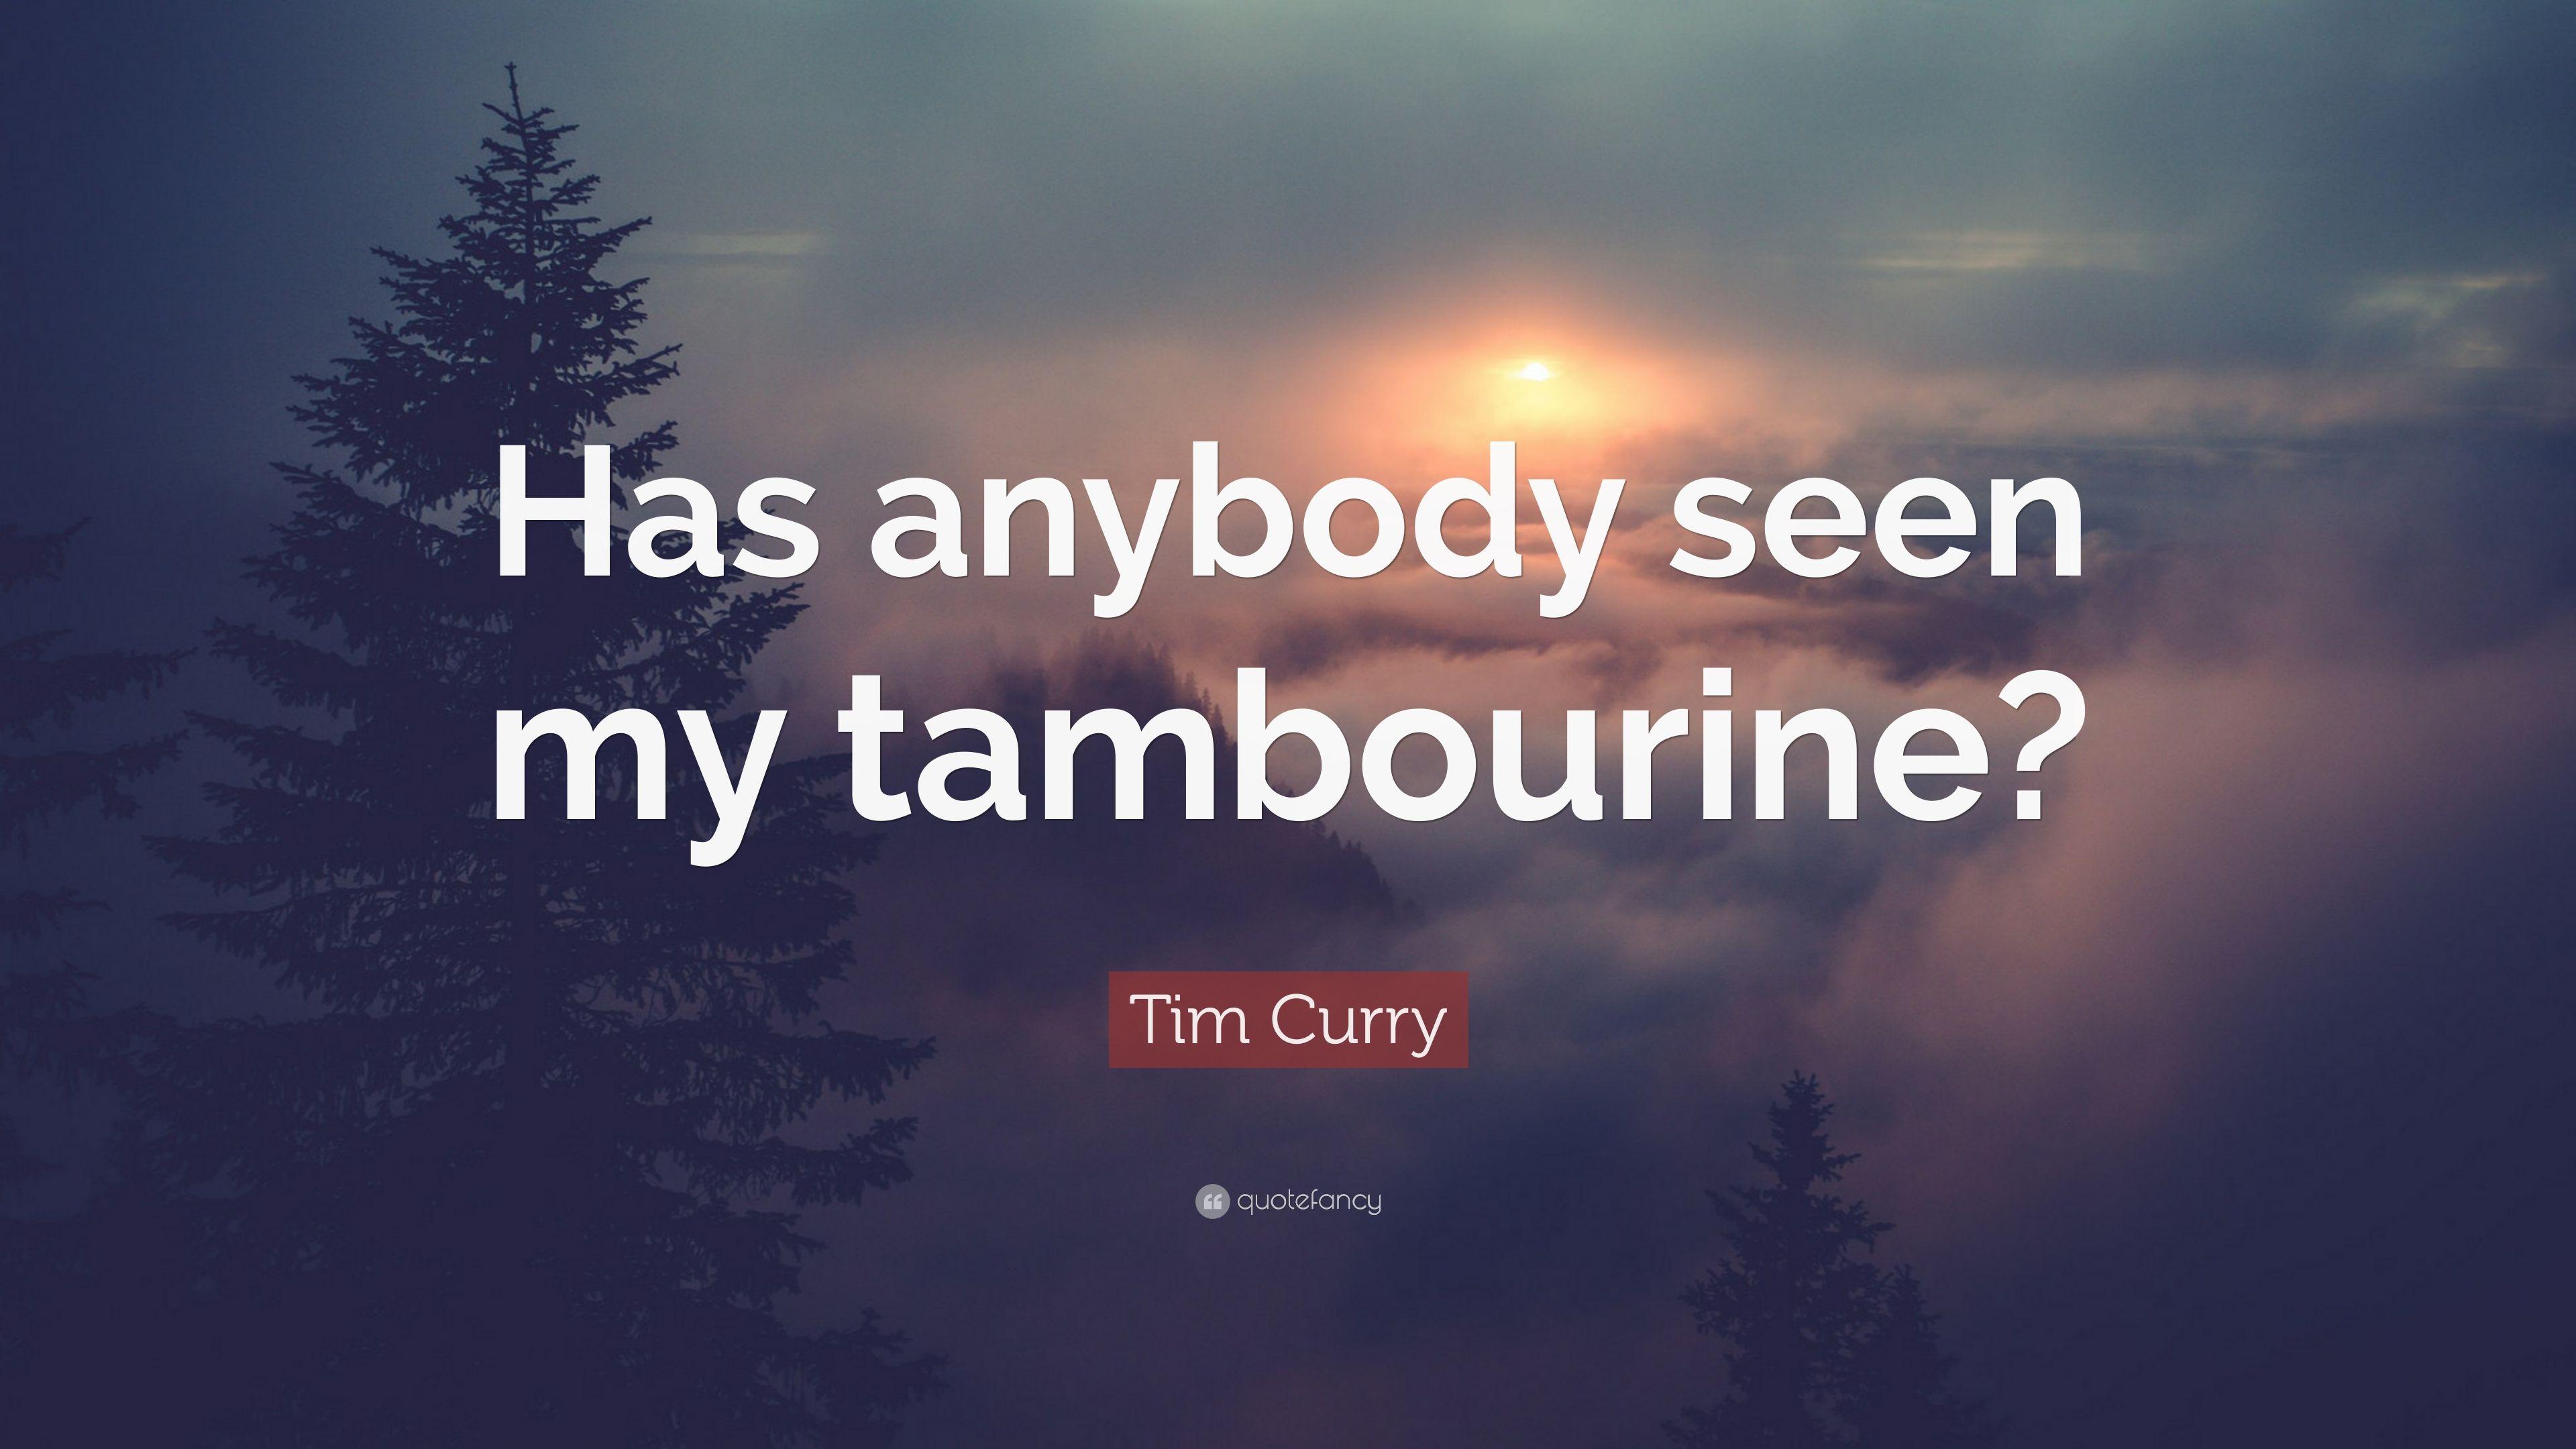 Tim Curry Quote: “Has anybody seen my tambourine?” 9 wallpaper